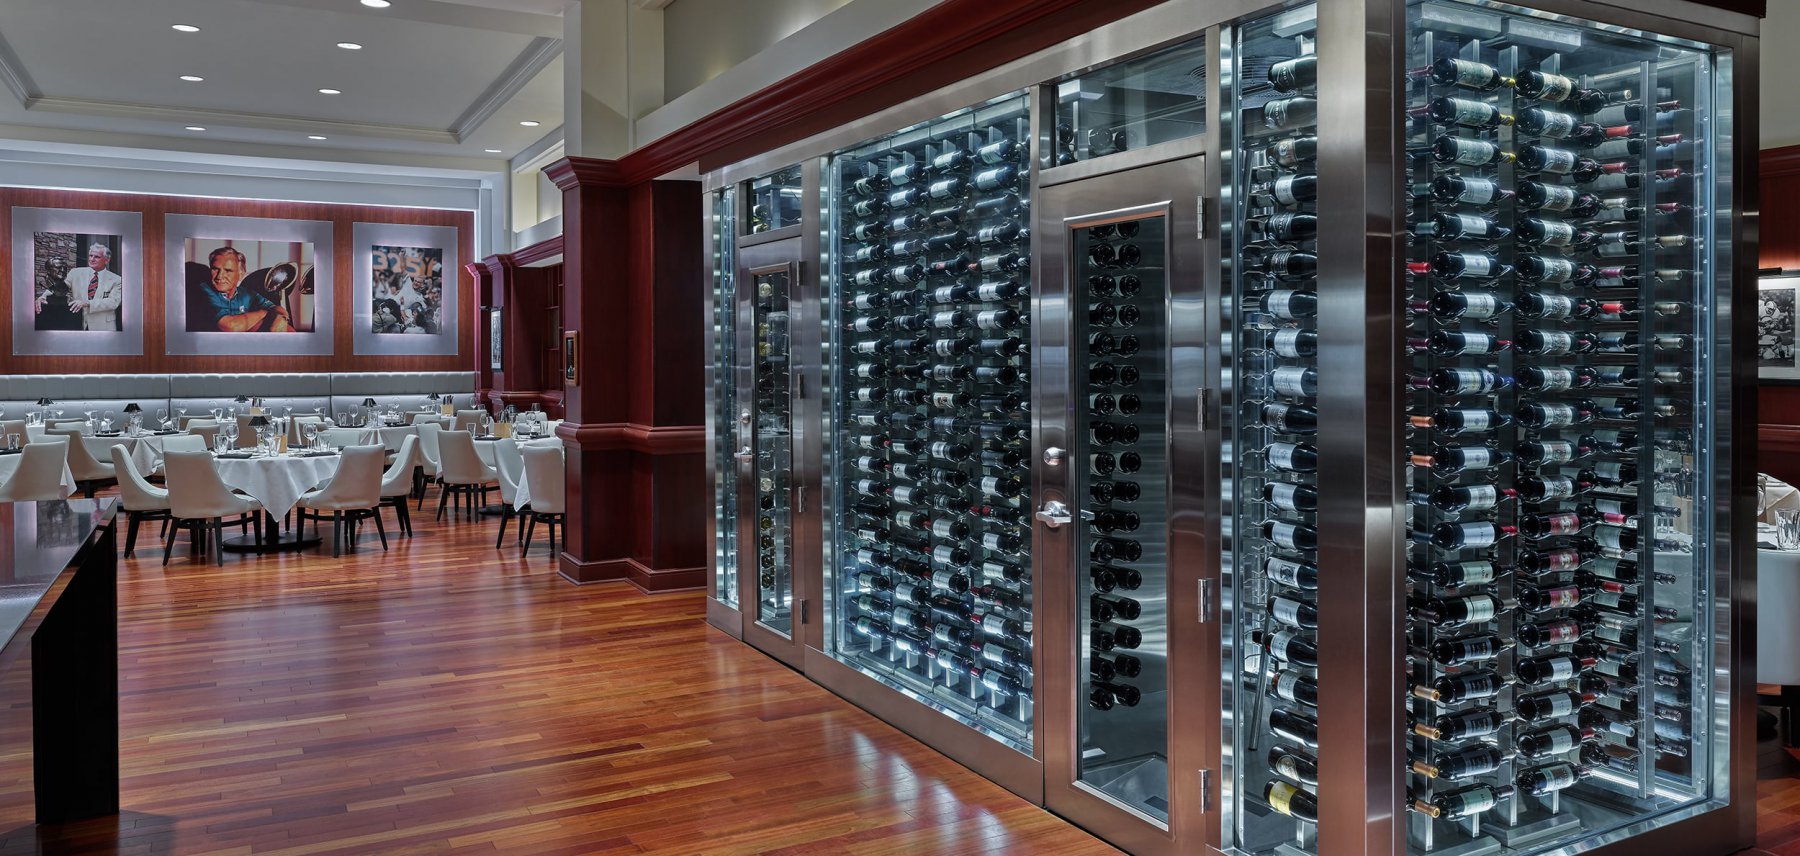 The large wine cellar showcase at Shula's Steak House at the Walt Disney World Dolphin Resort